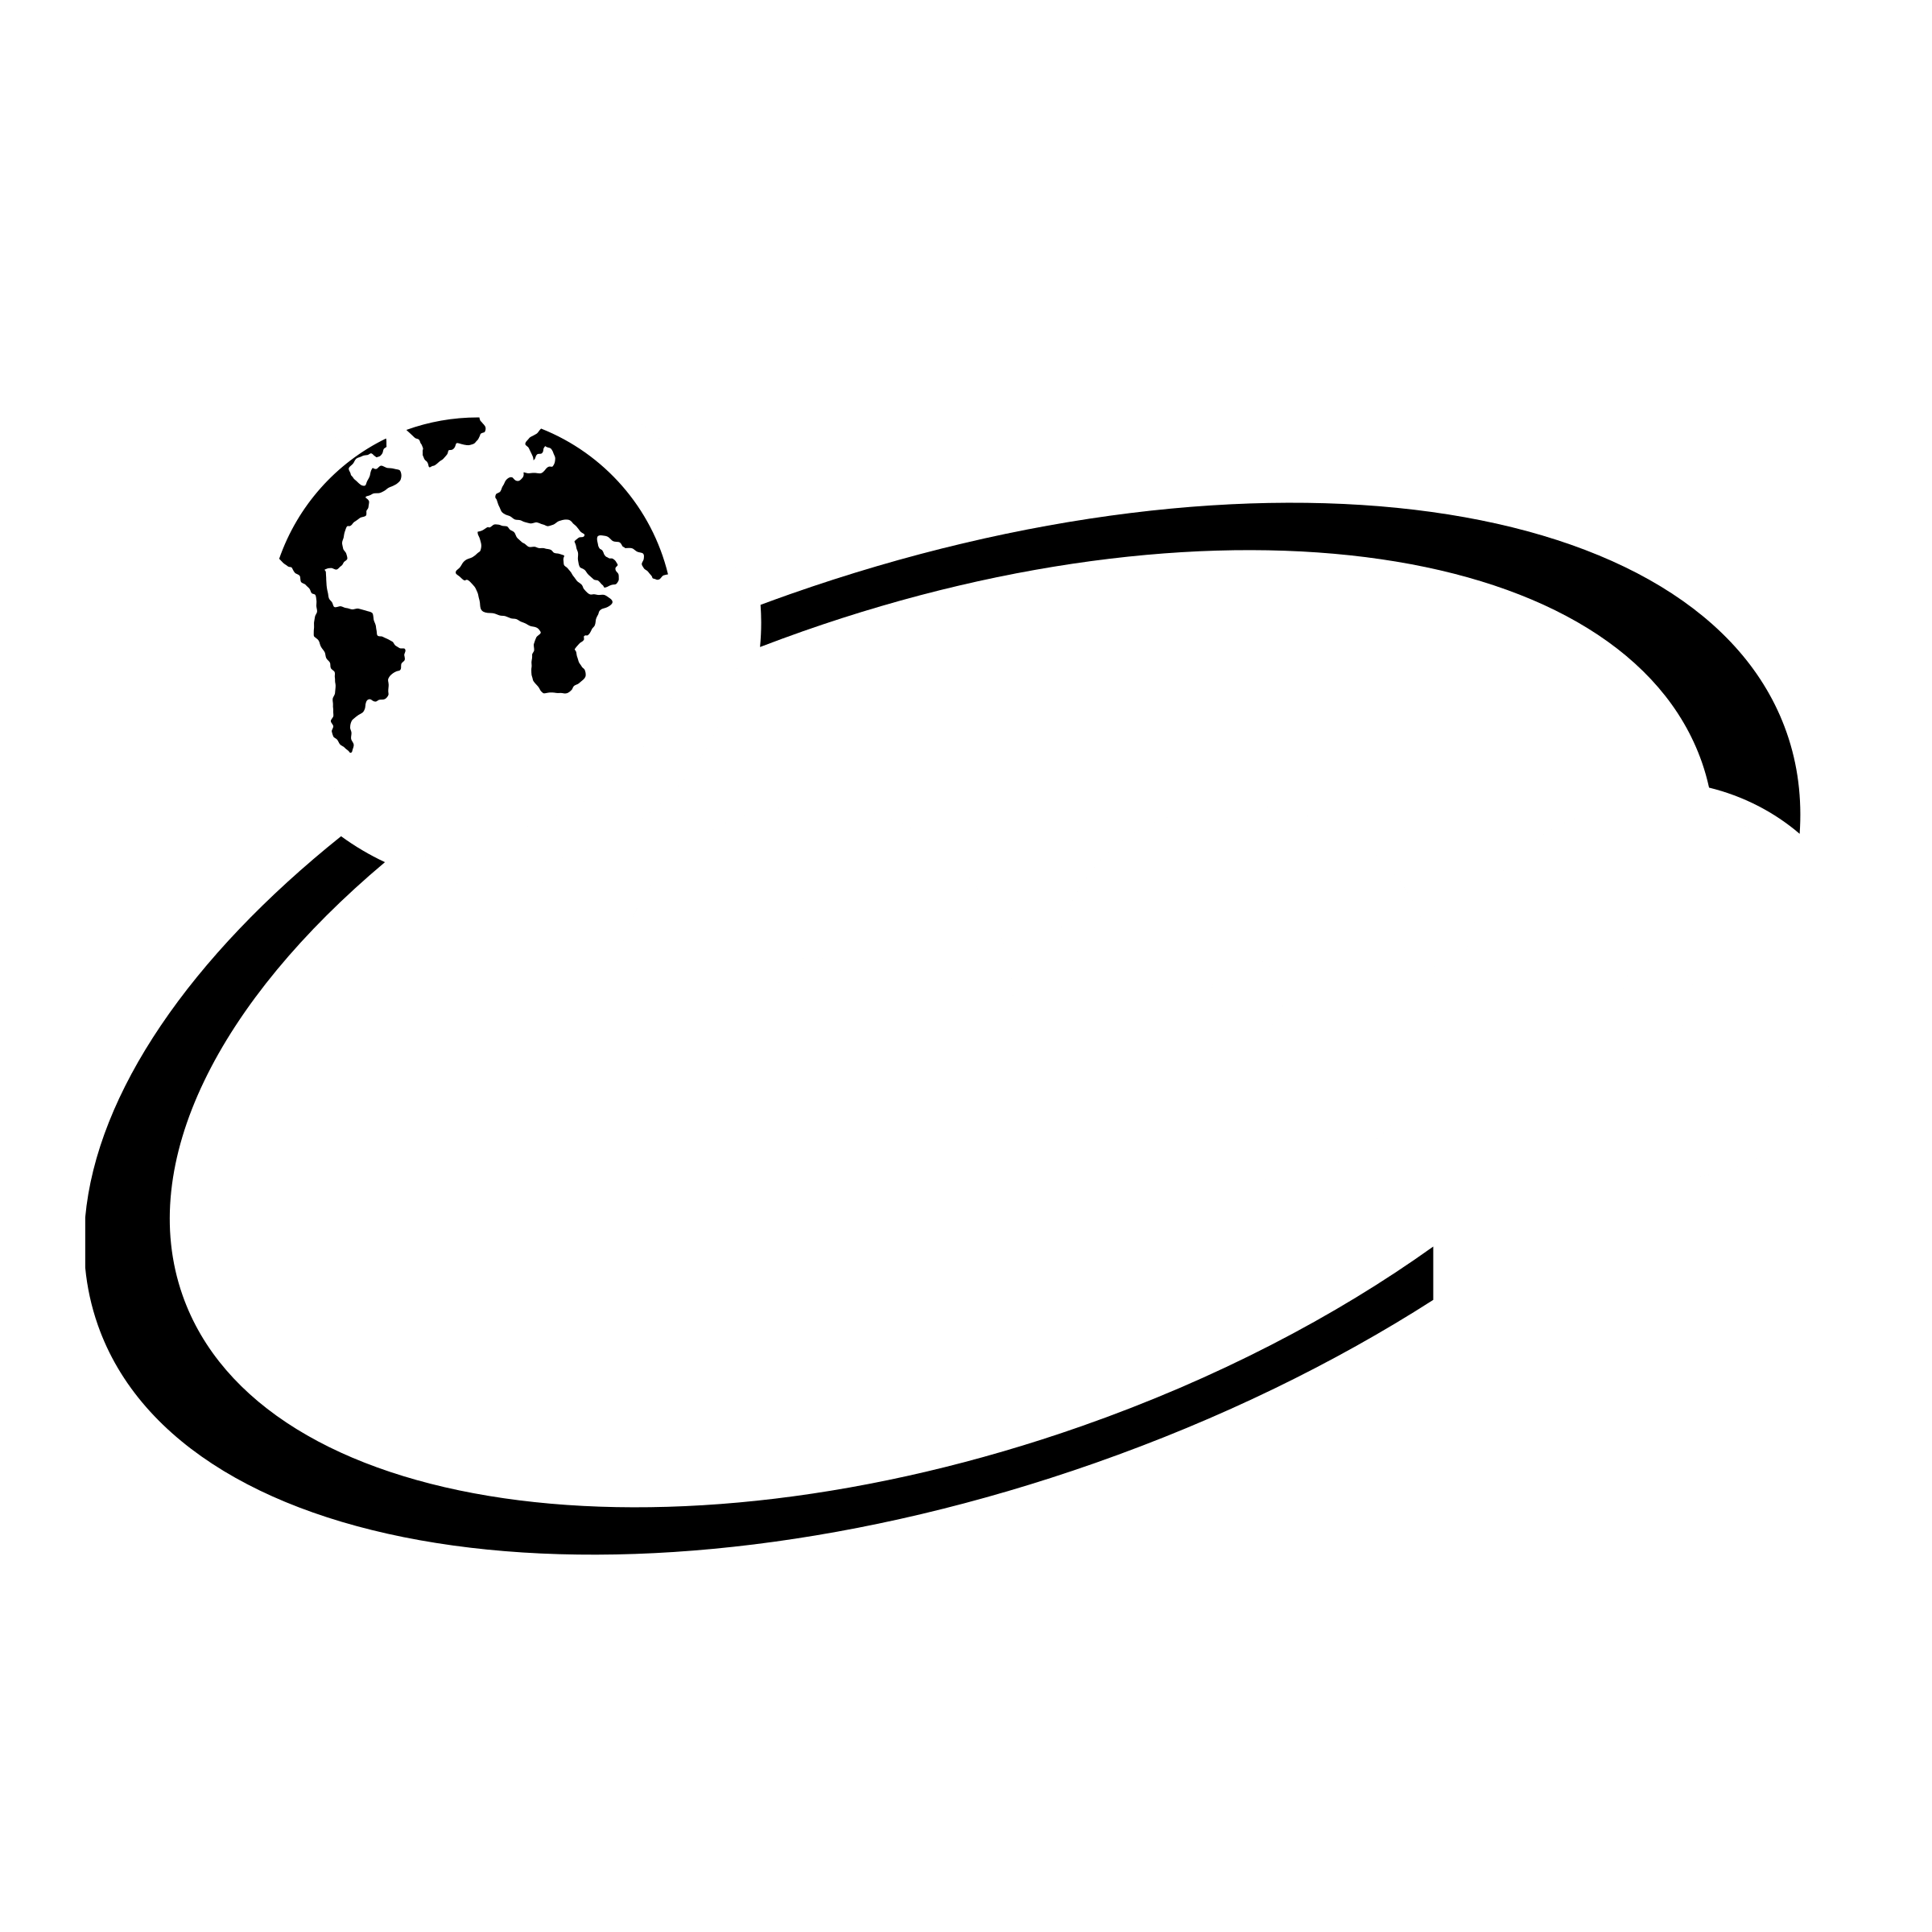 Iapp Logo - IAPP Logo PNG Transparent & SVG Vector - Freebie Supply